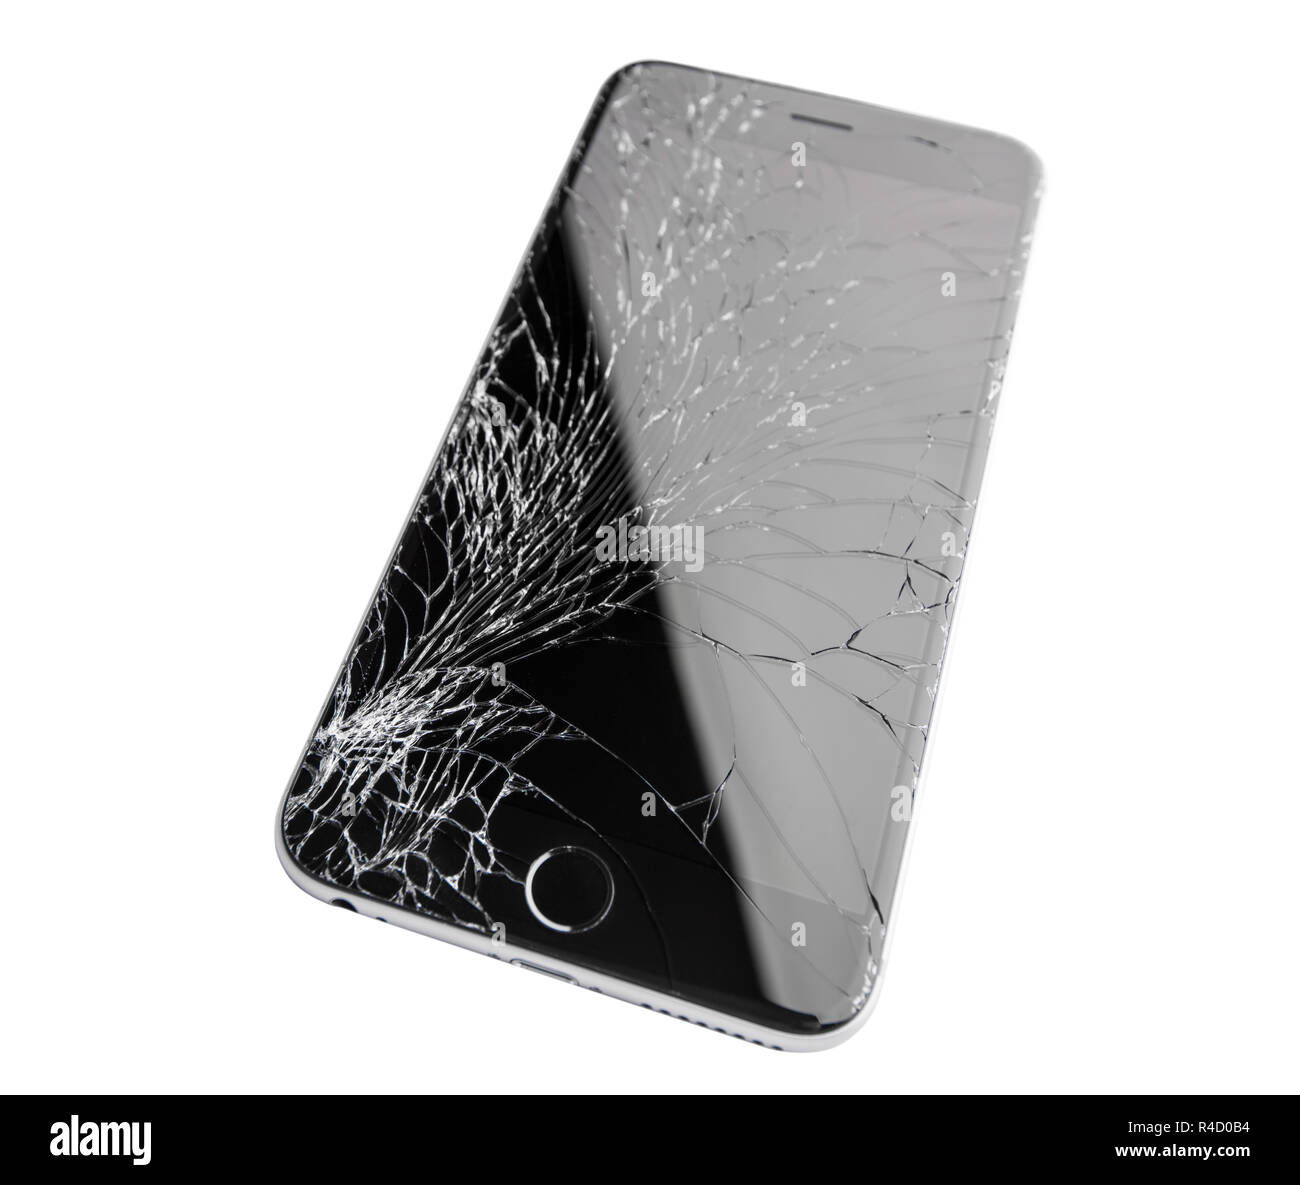 Iphone dañado sobre fondo blanco. Foto de stock